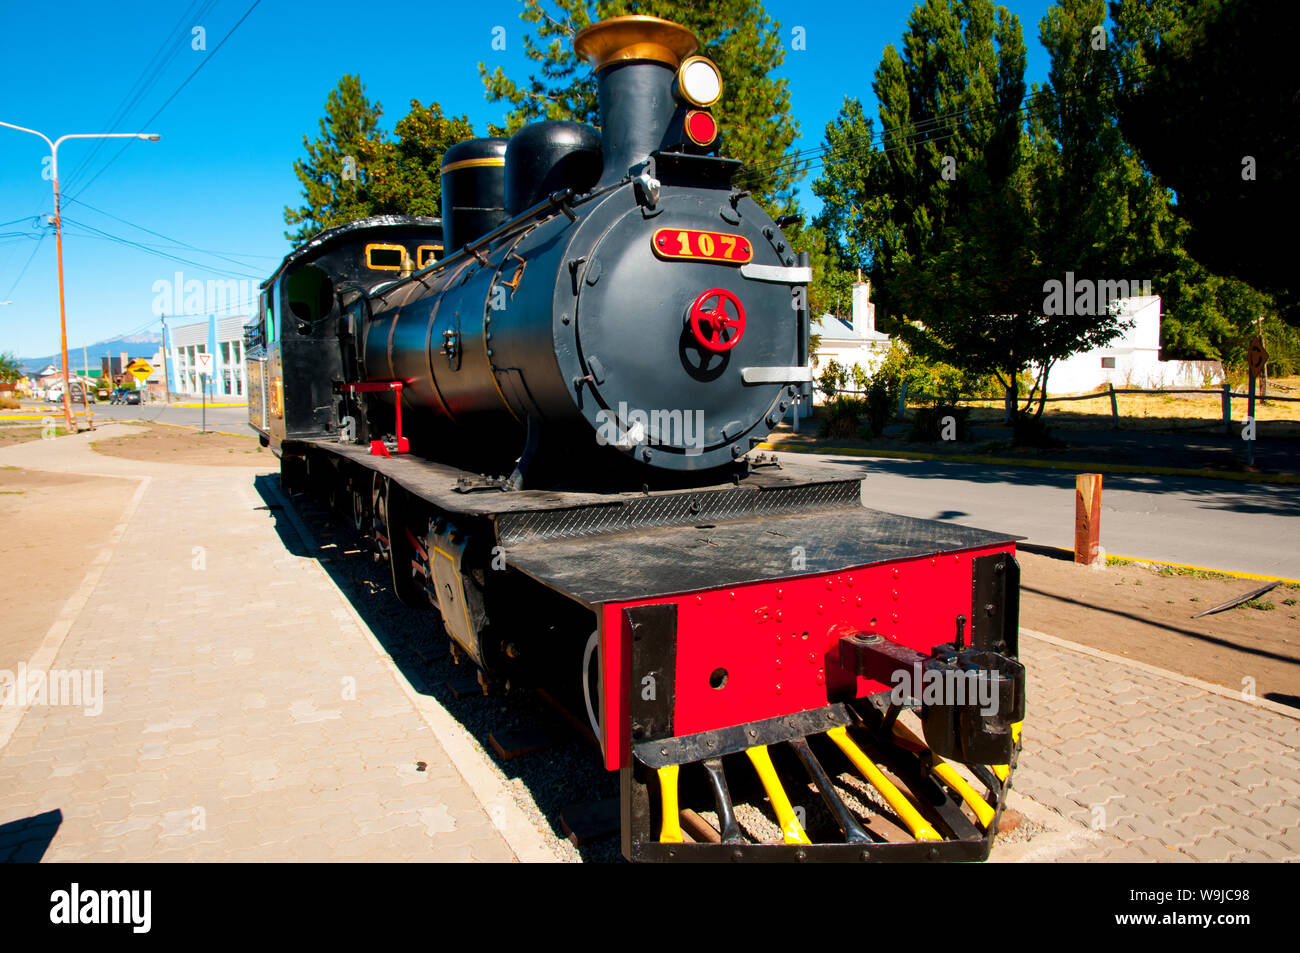 Old Patagonian Express Locomotive - Argentina Stock Photo